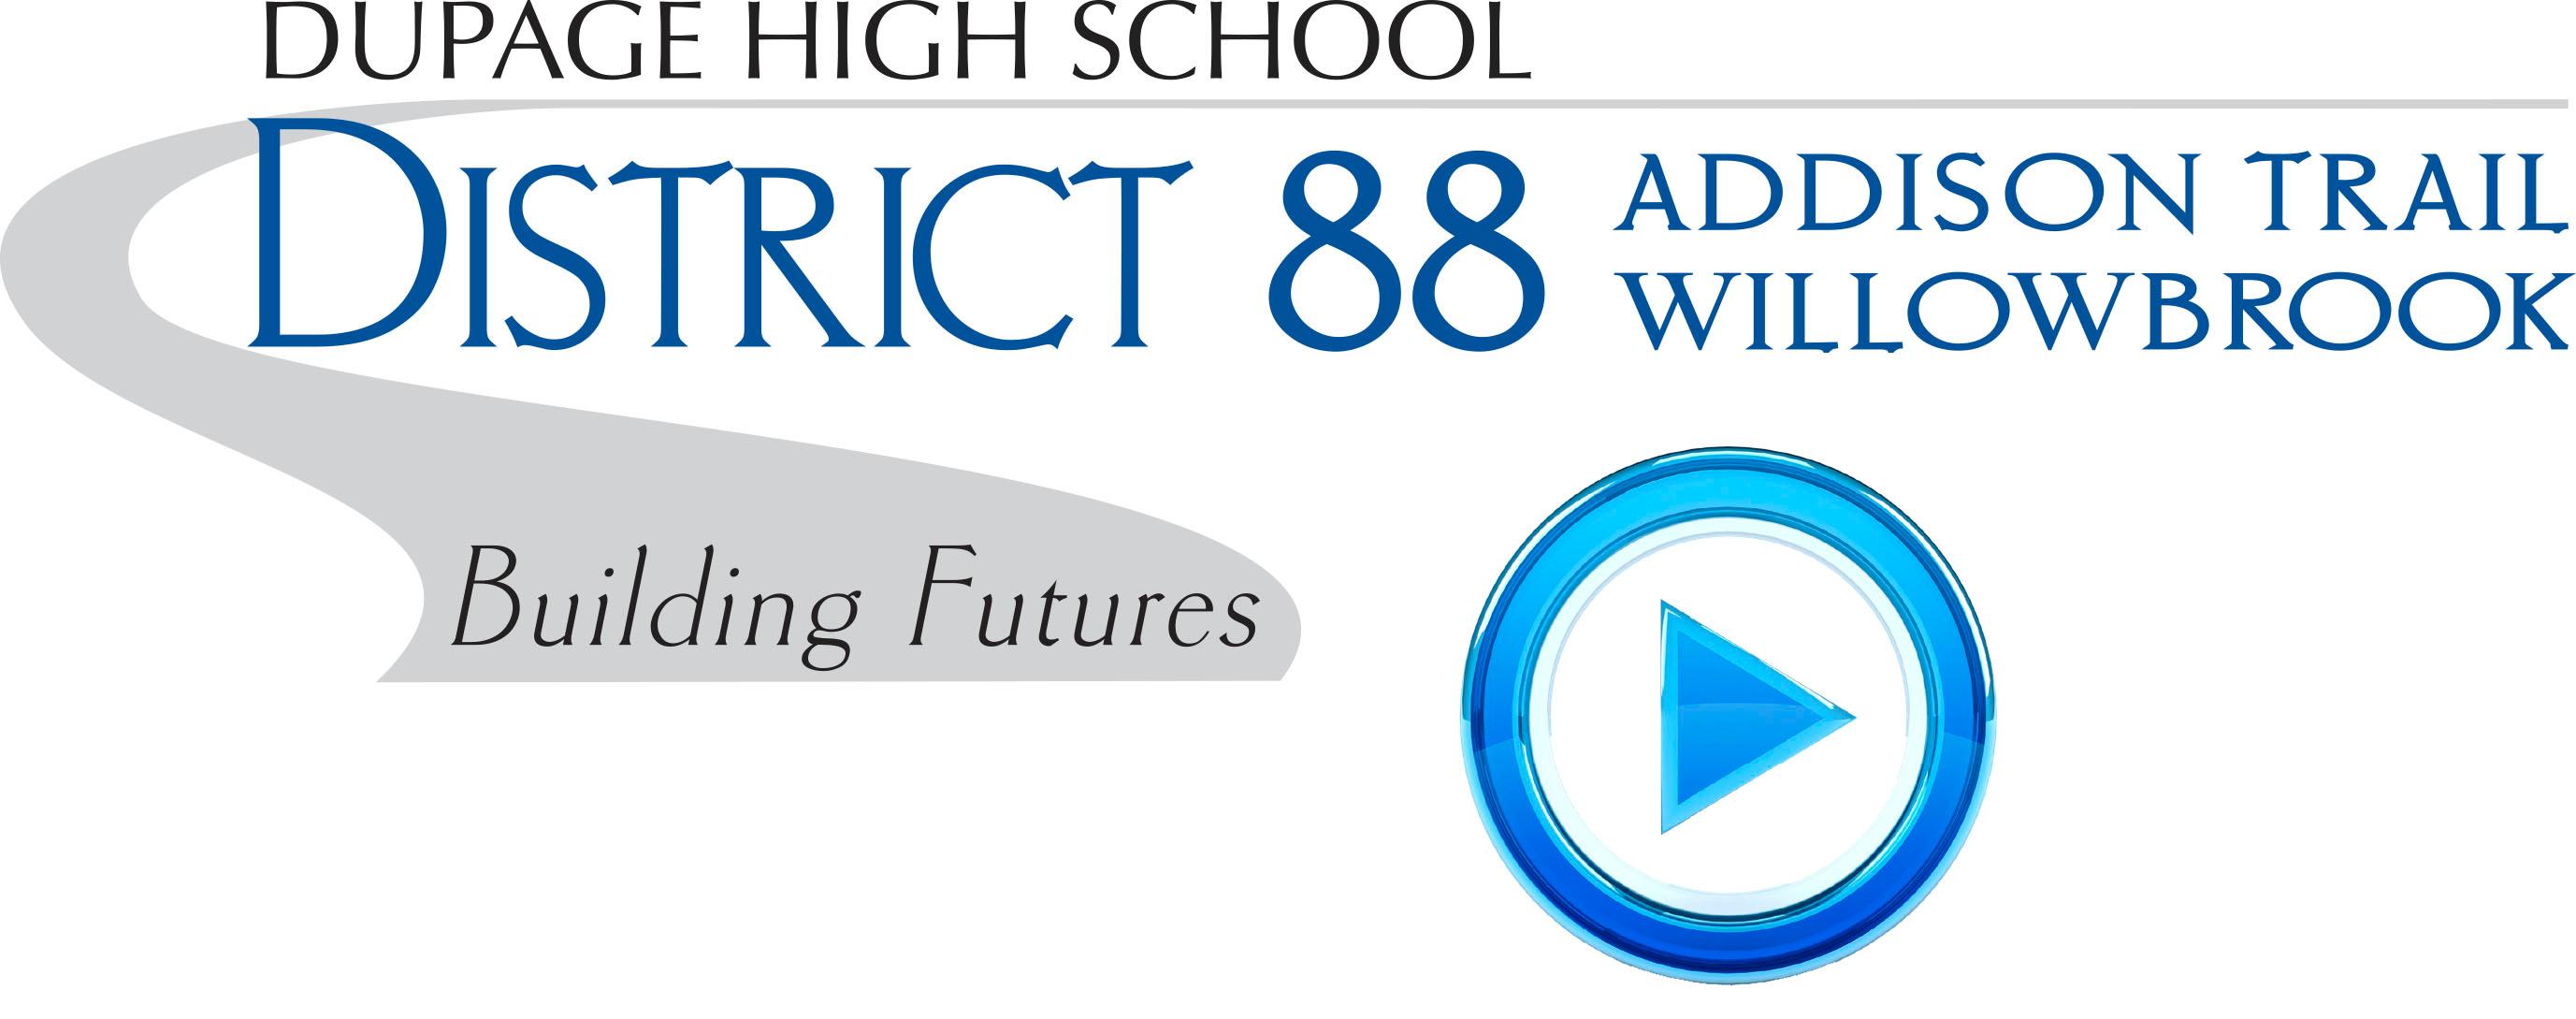 DuPage High School District 88